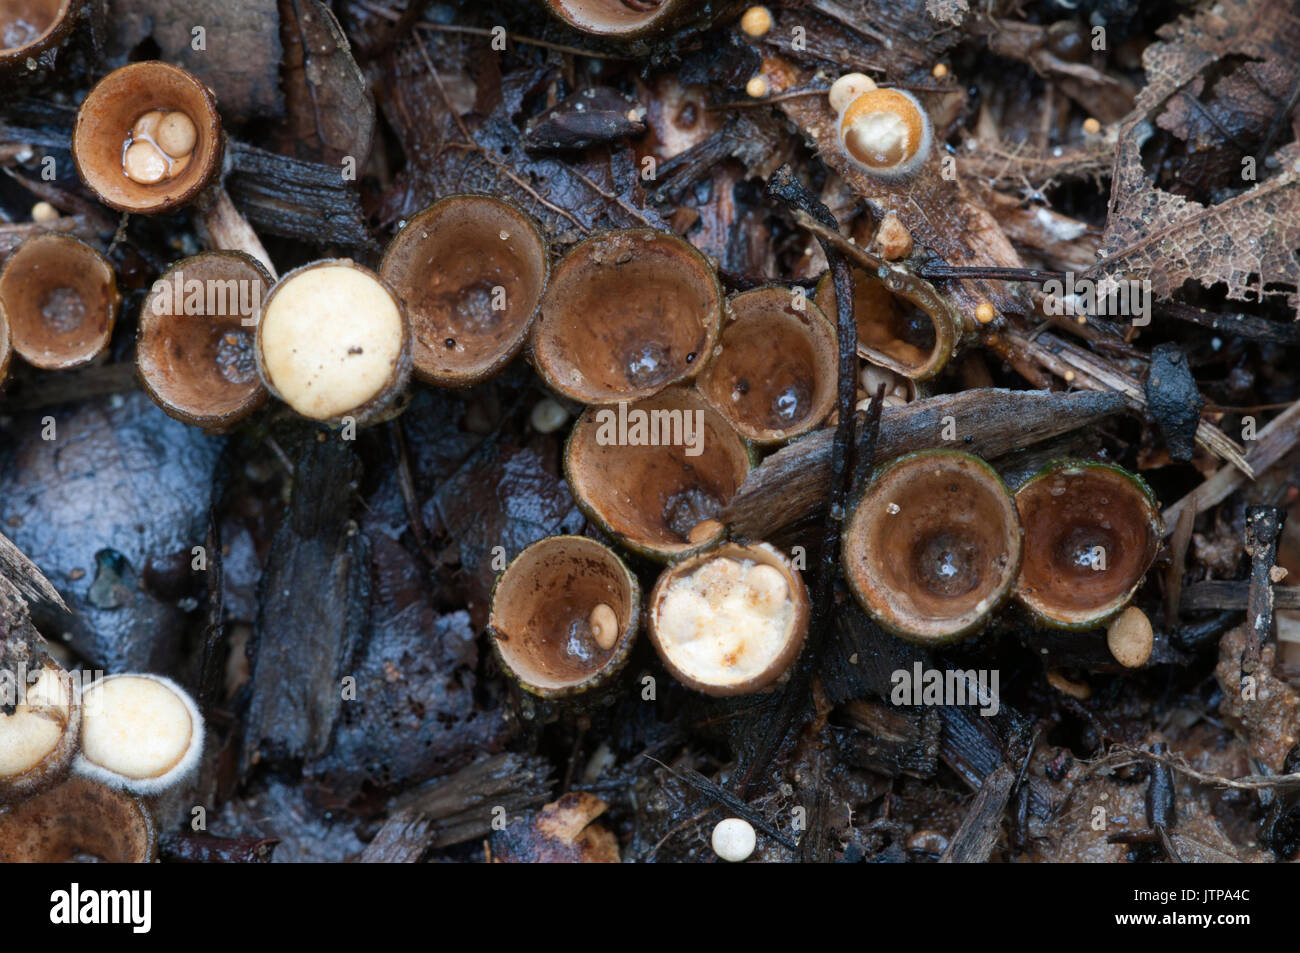 Crucibulum laeve mushrooms on the autumn leaves Stock Photo